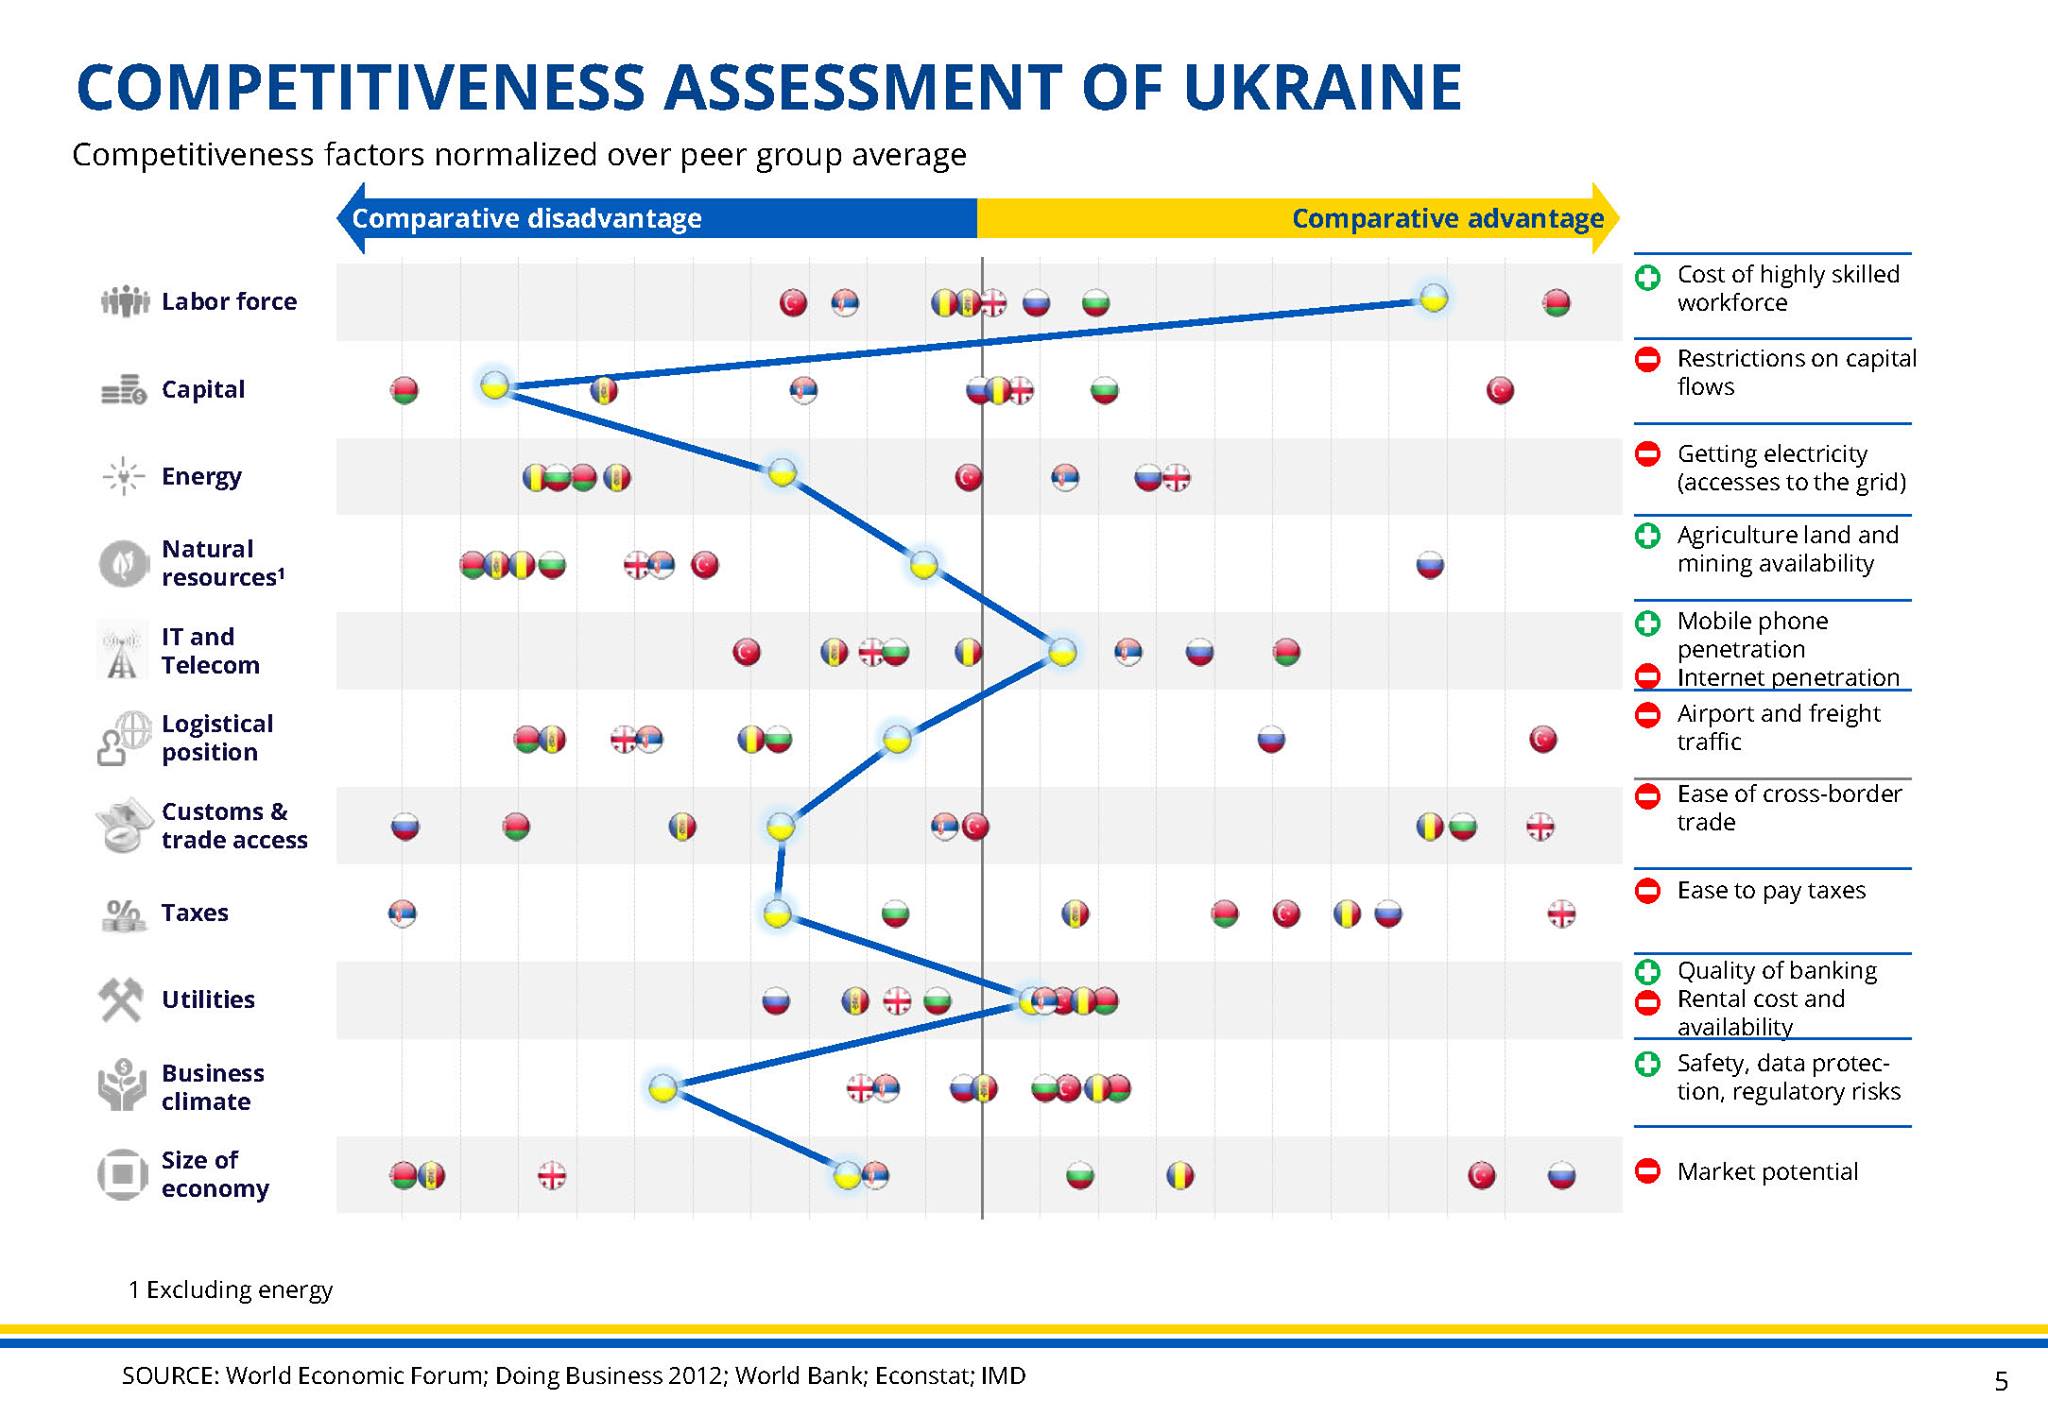 New Approaches to attract FDI in Ukraine